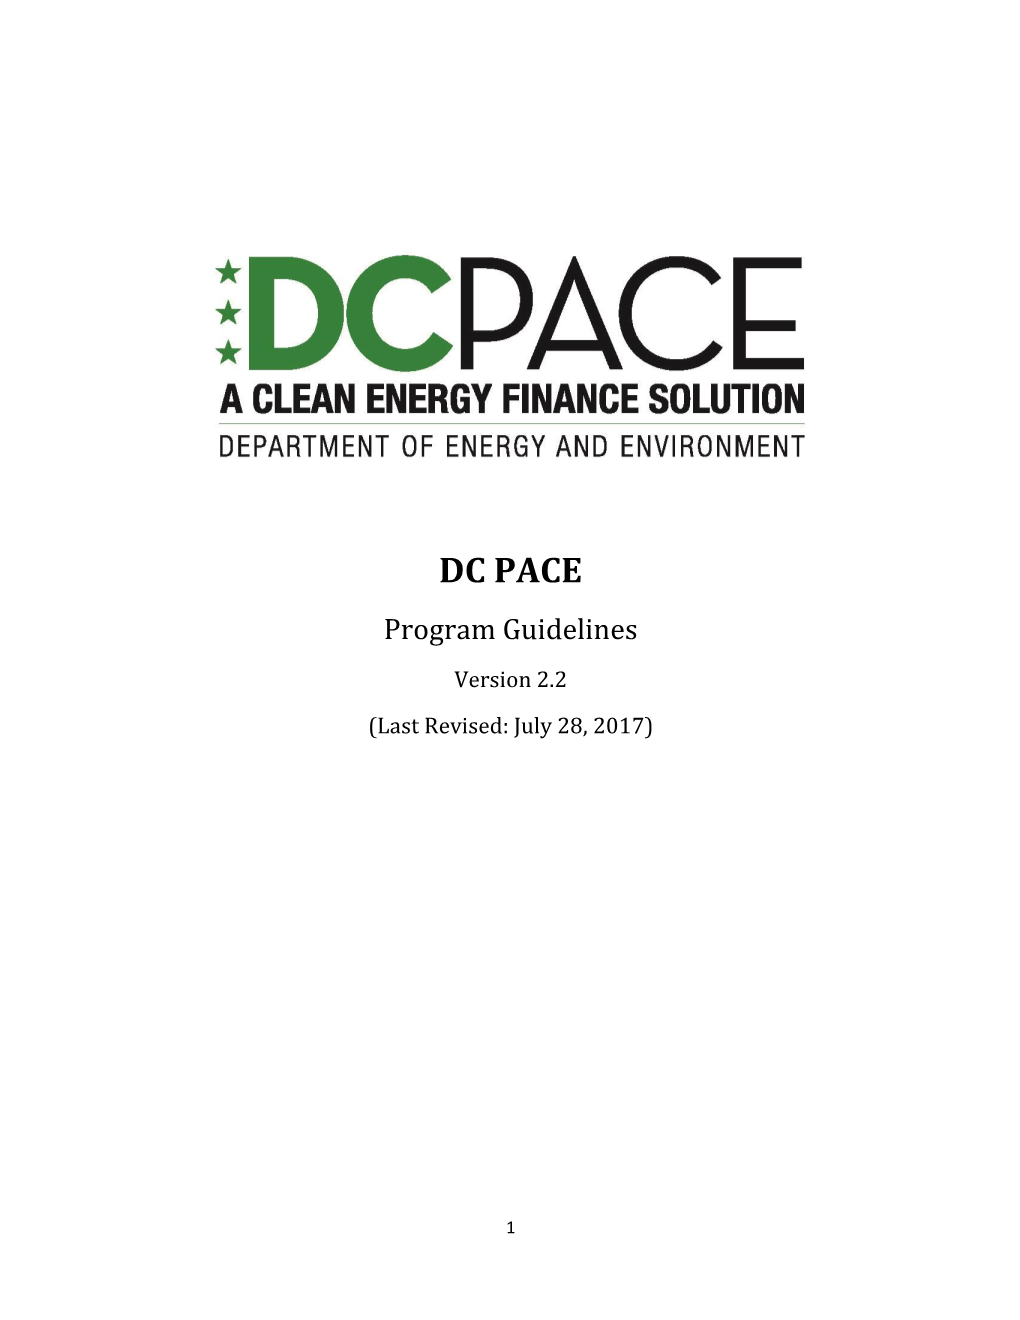 DC PACE Program Guidelines Version 2.2 (Last Revised: July 28, 2017)